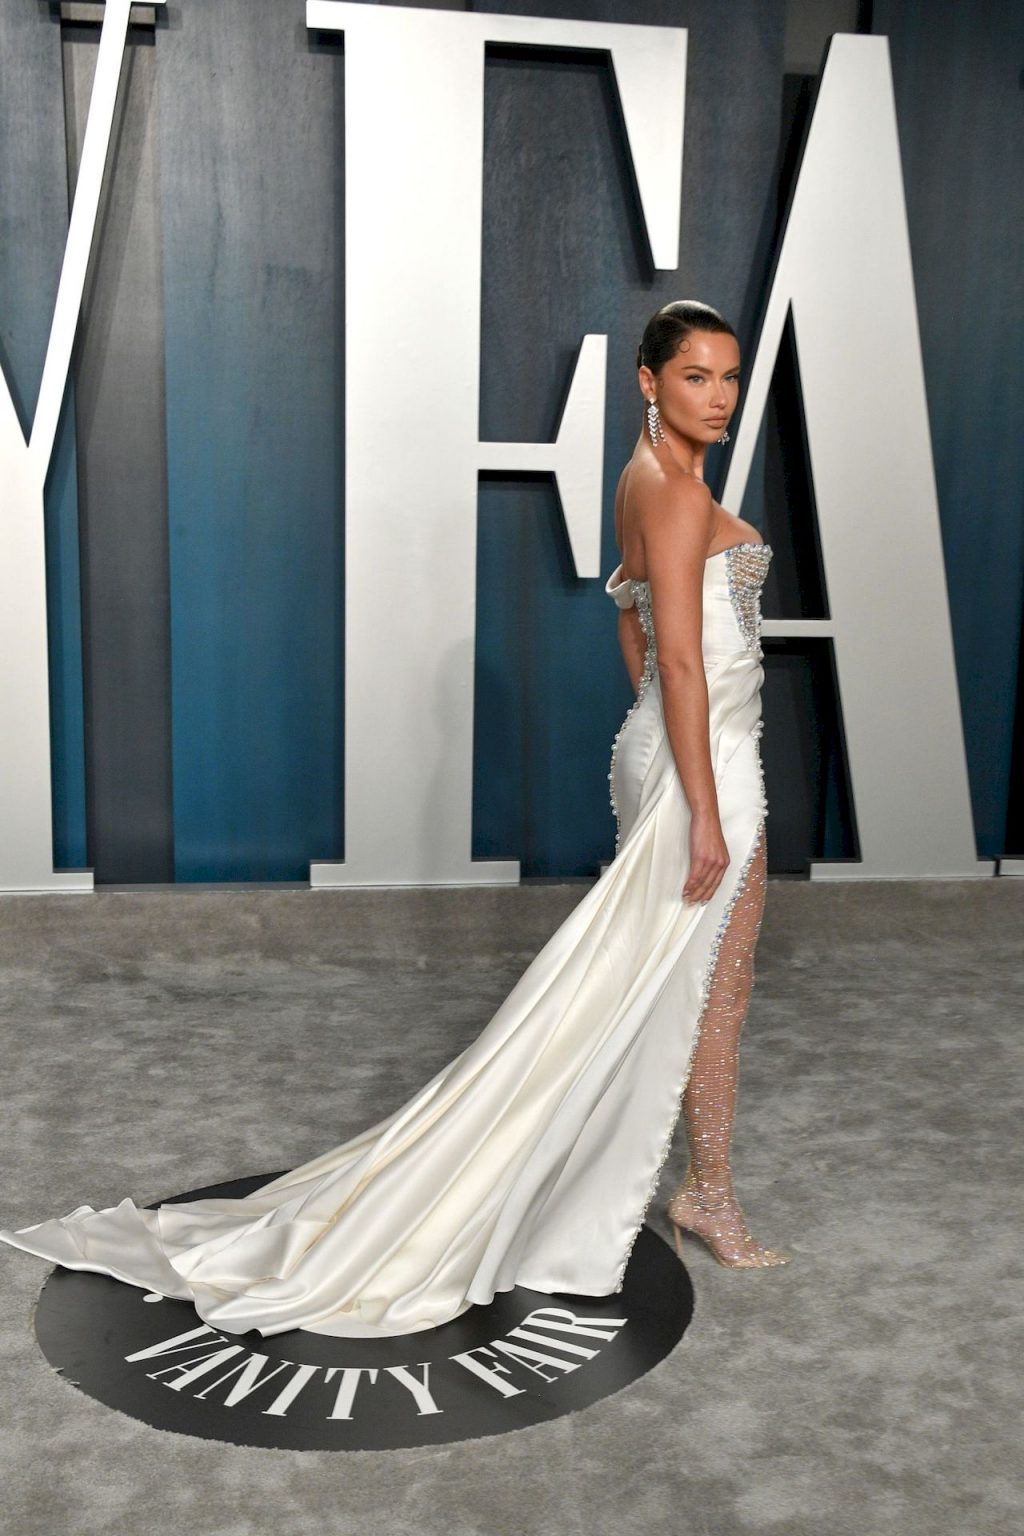 Adriana Lima Flaunts Her Famous Figure at the 2020 Vanity Fair Oscar Party (90 Photos)